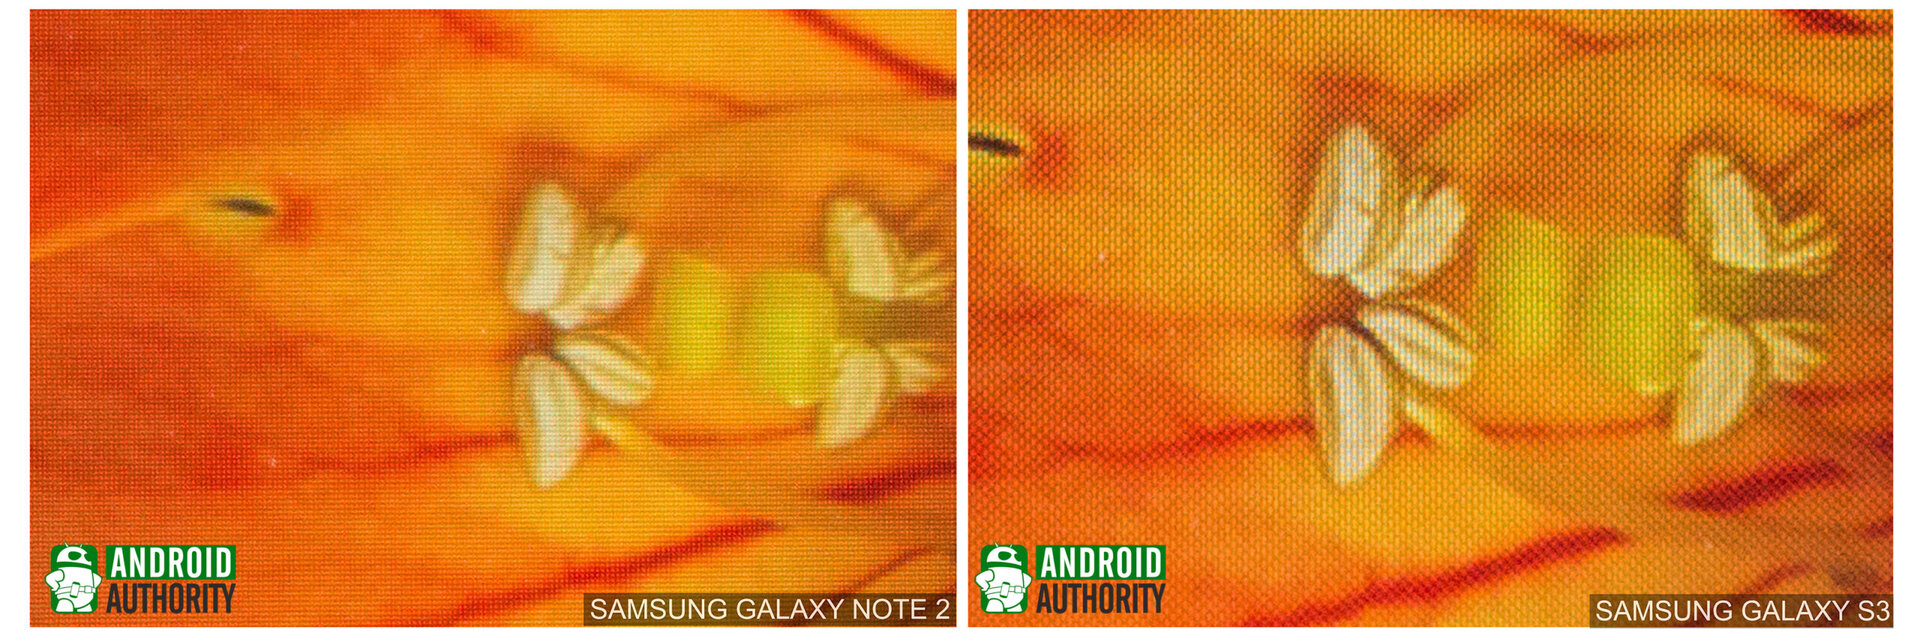 galaxy note 2 vs galaxy s3 display 4